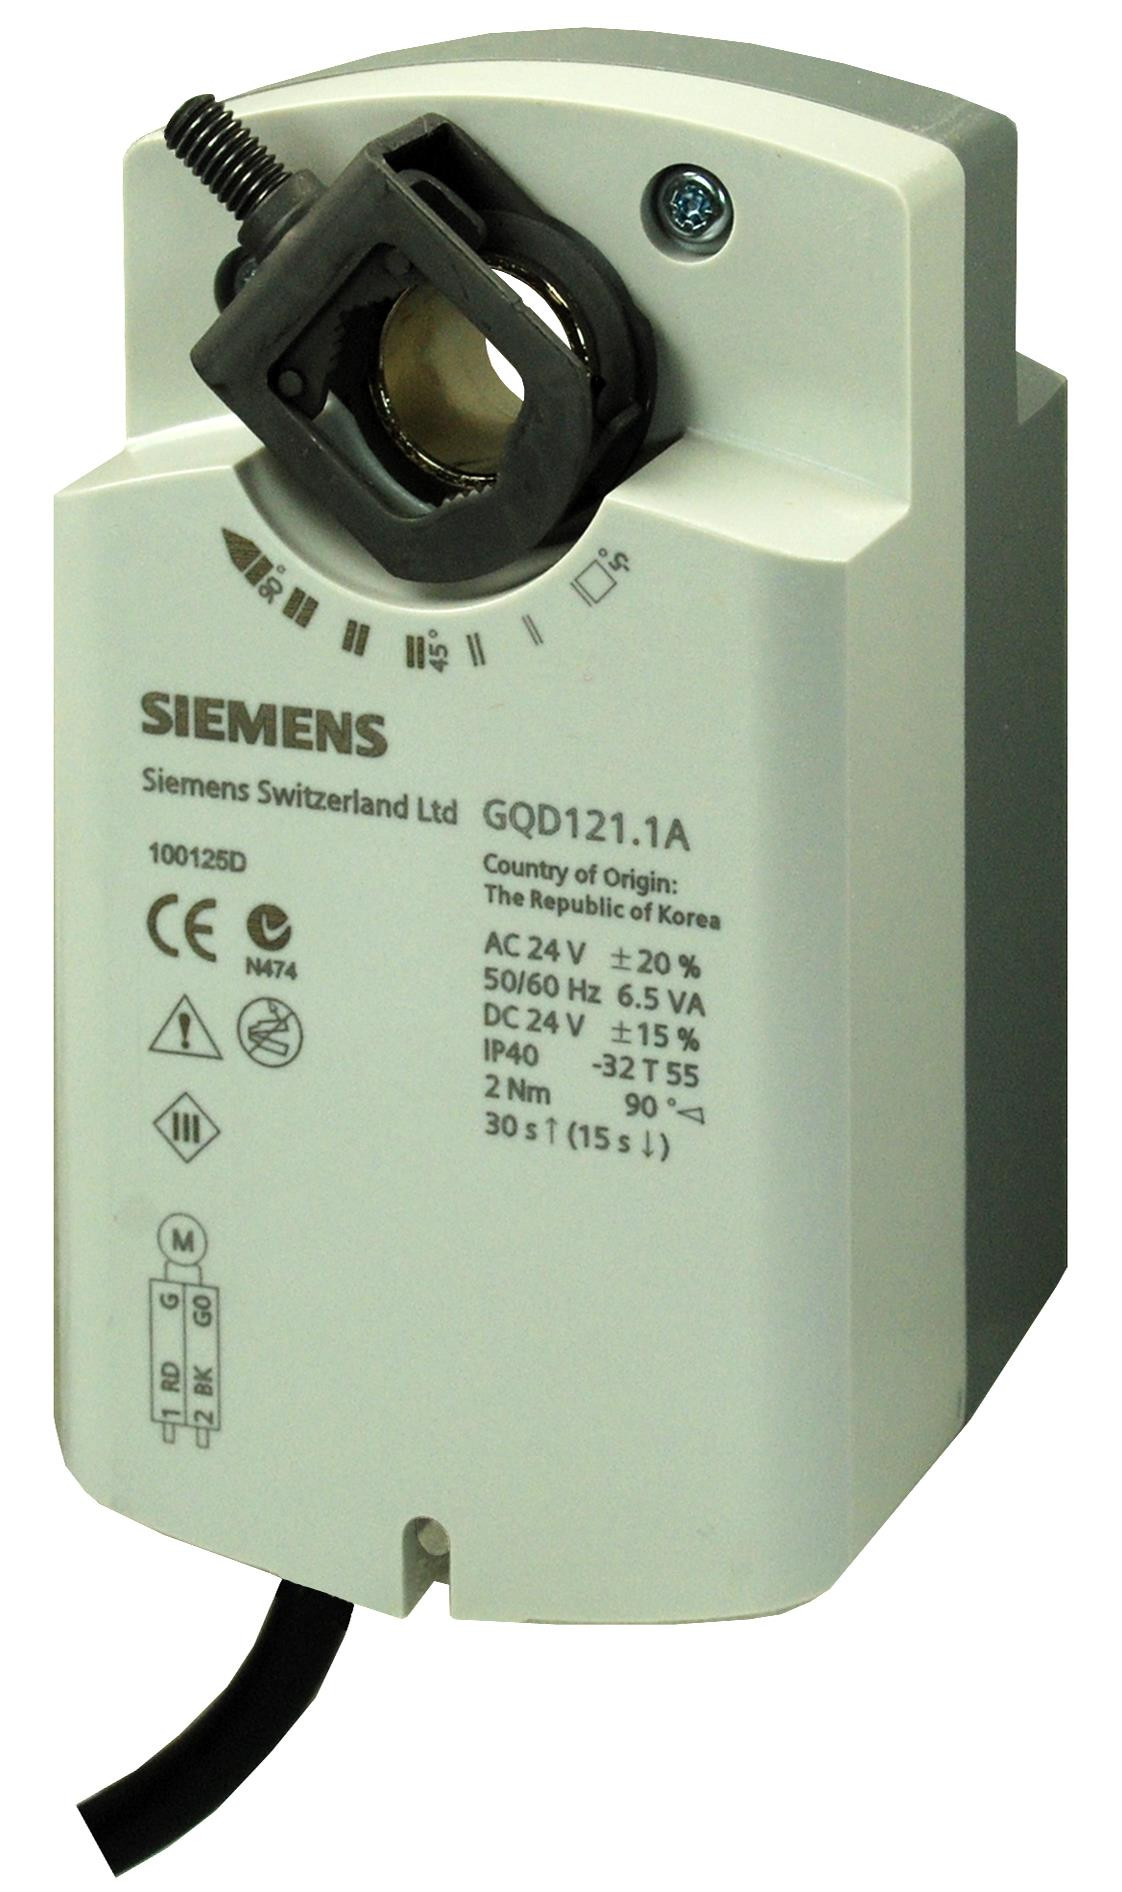 Siemens Luftklappen-Drehantrieb, AC 230 V, 2 Nm, 2-Punkt, Federrücklauf 30/15 s GQD321.1A